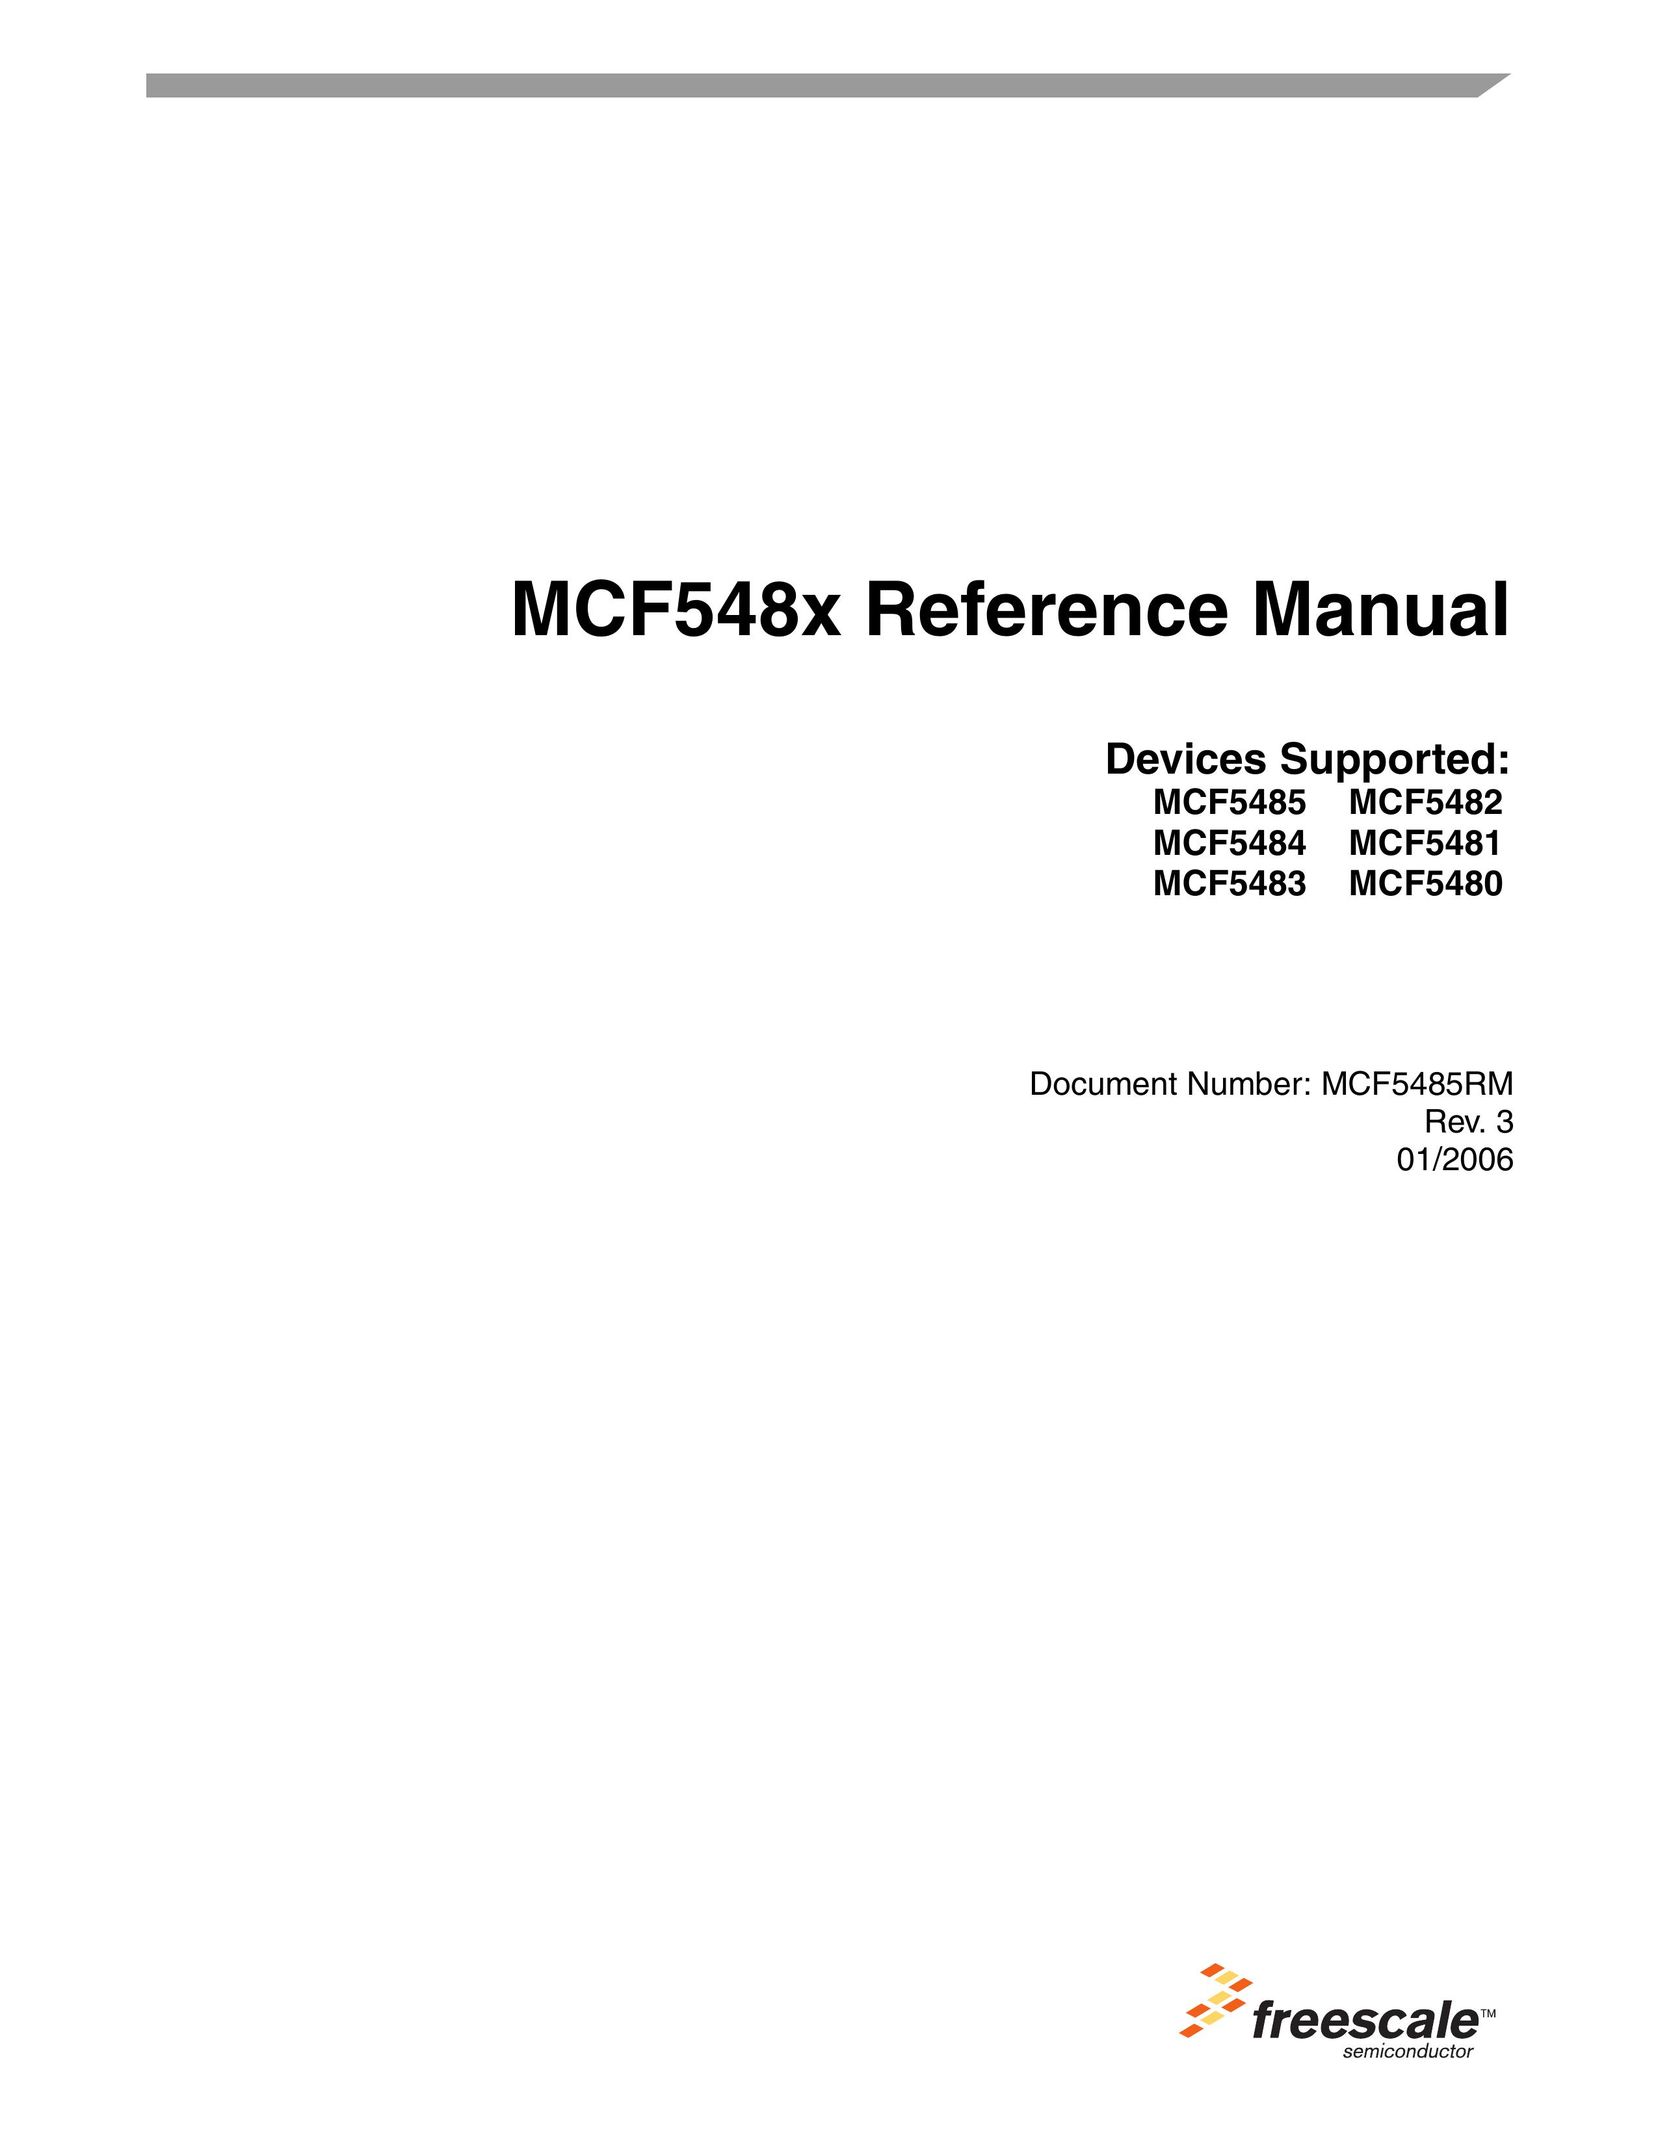 Freescale Semiconductor MCF5485 Computer Hardware User Manual